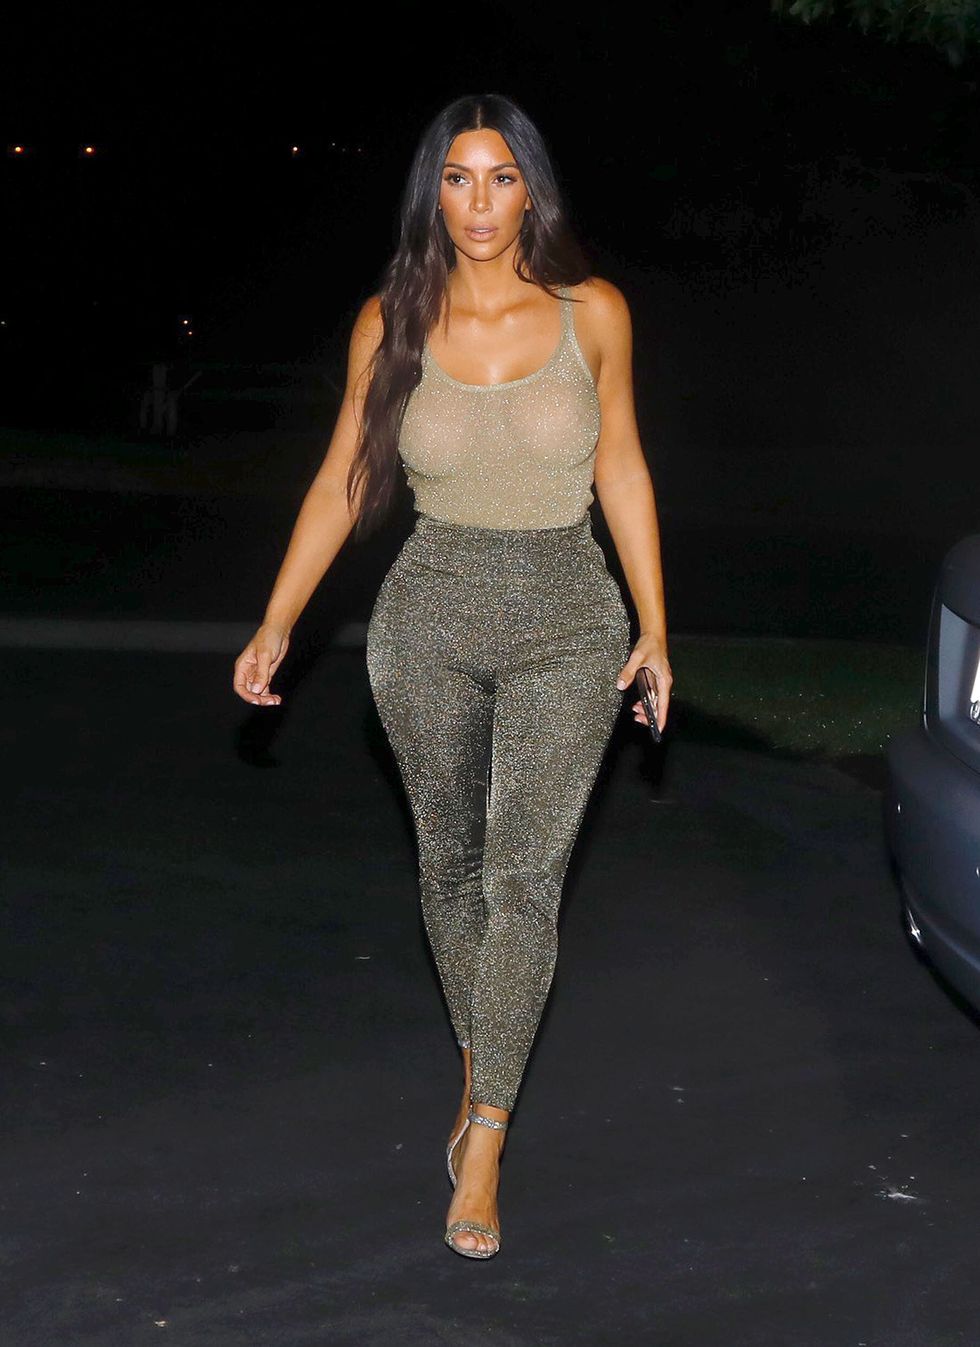 Kim Kardashian wearing a sparkly outfit